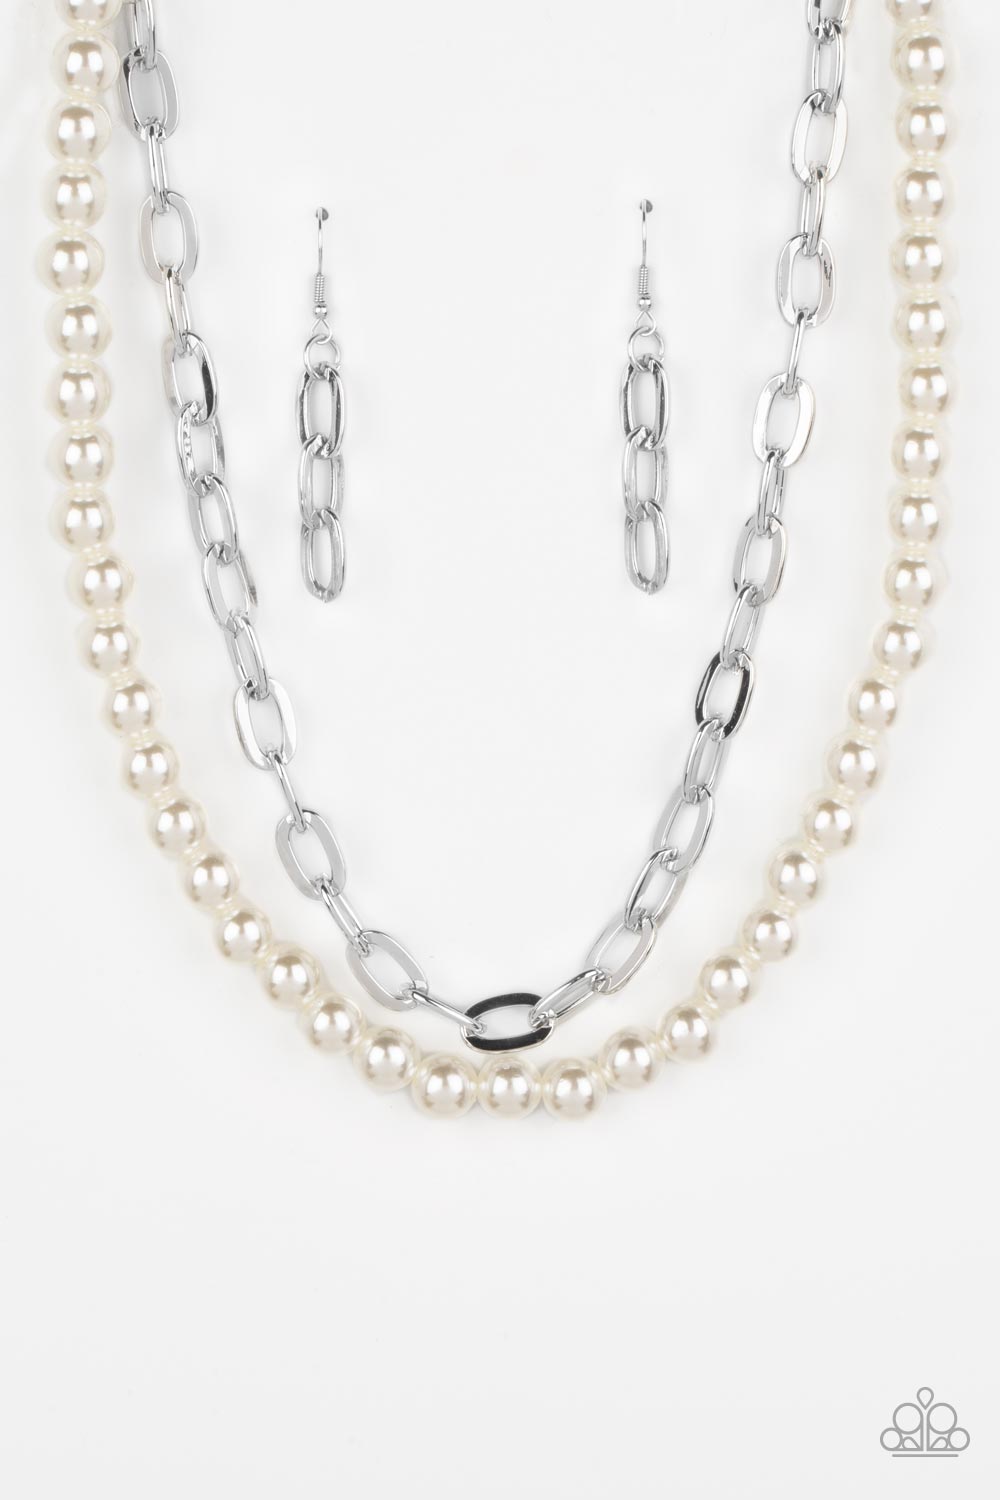 five-dollar-jewelry-suburban-yacht-club-white-necklace-paparazzi-accessories